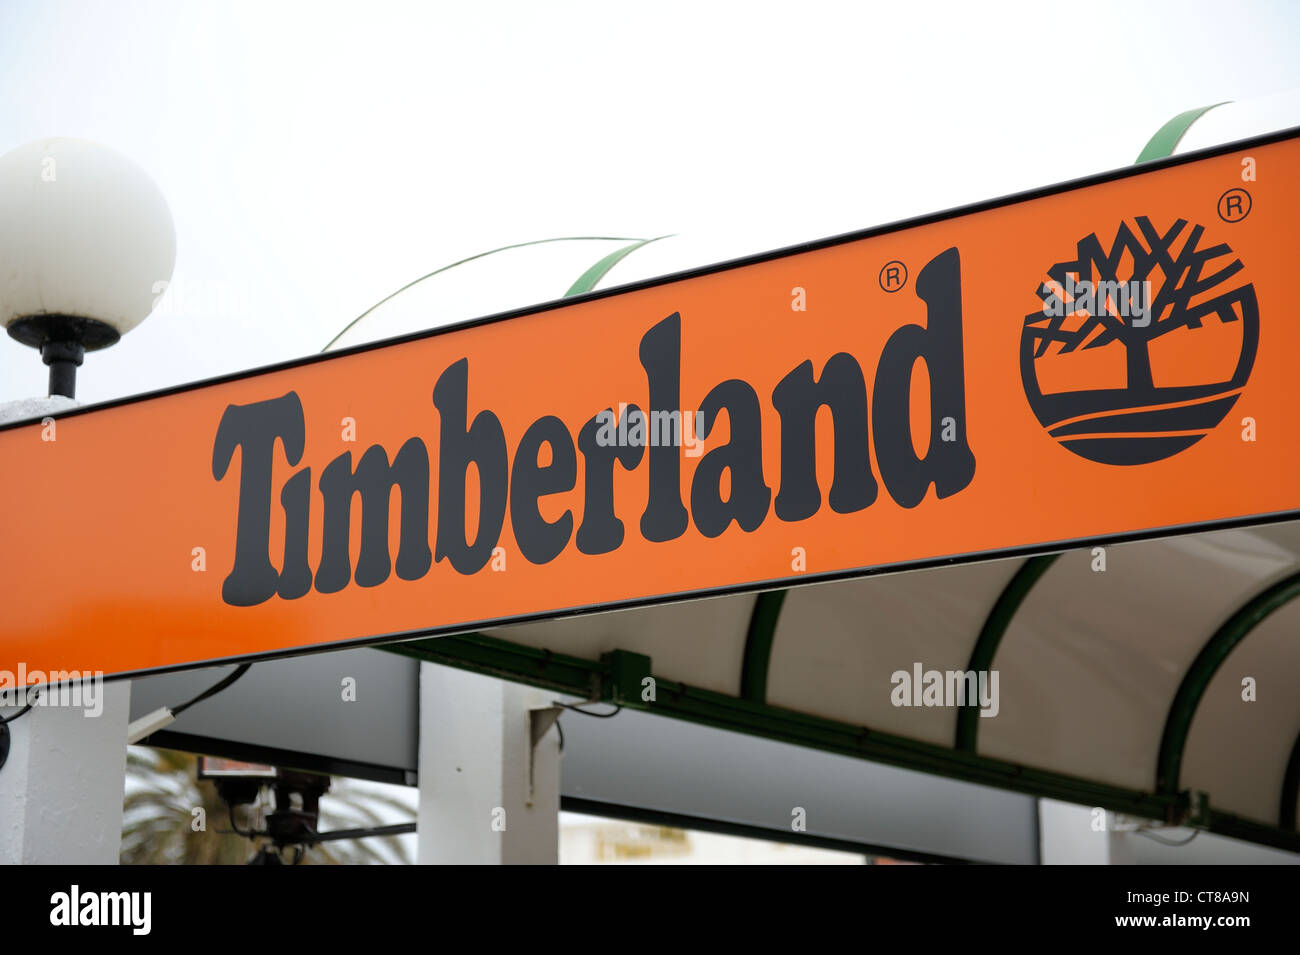 timberland shop logo menorca spain Stock Photo - Alamy